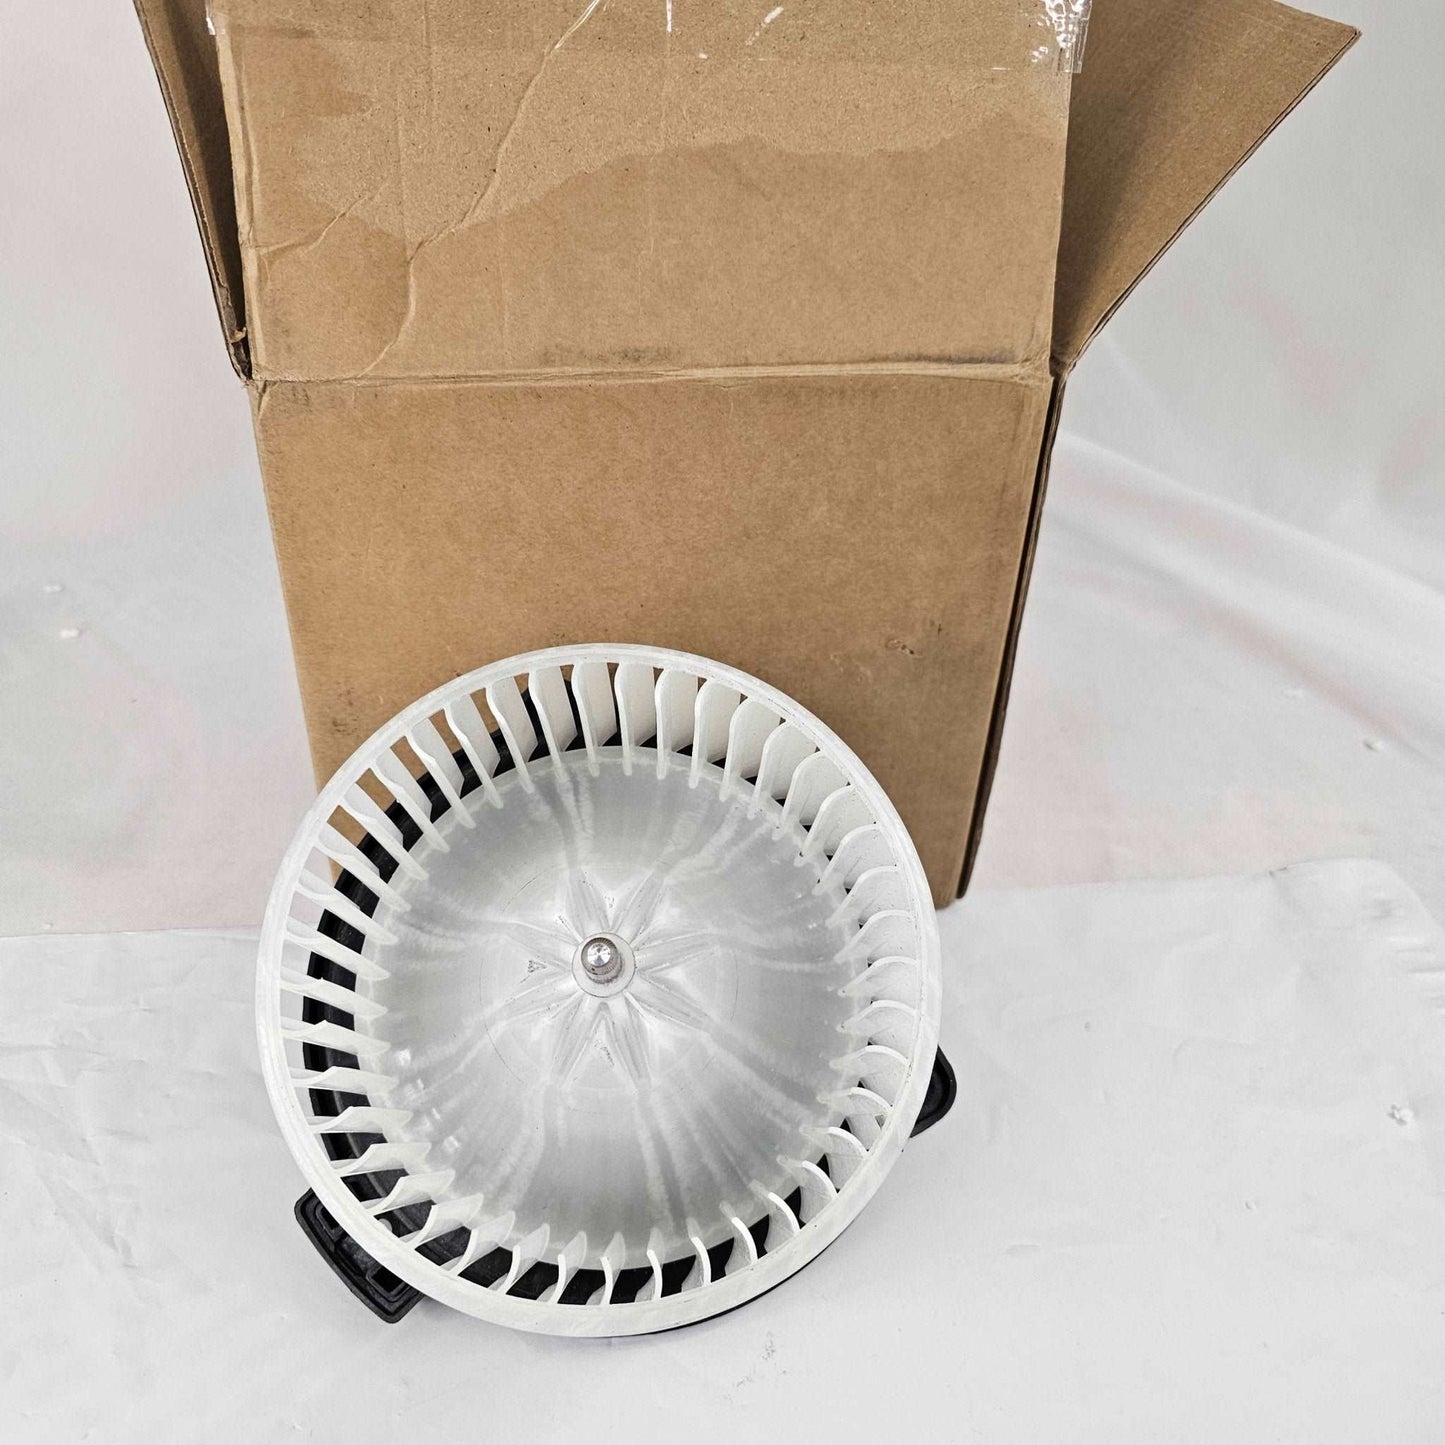 Blower Motor Fan - Boxi - DQ Distribution